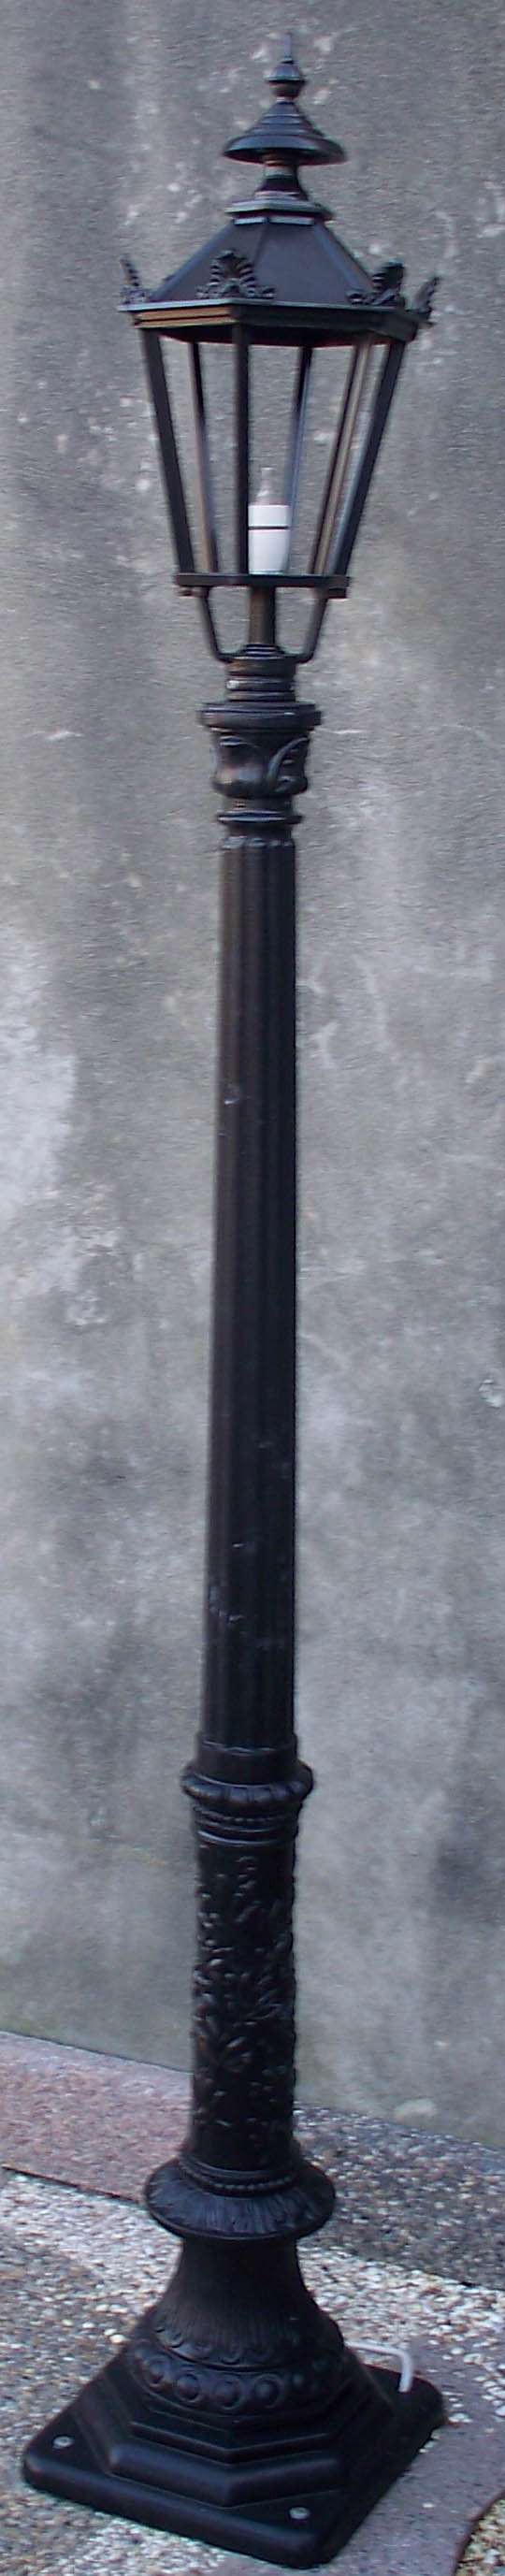 No 3 pole with medium 6 sided head